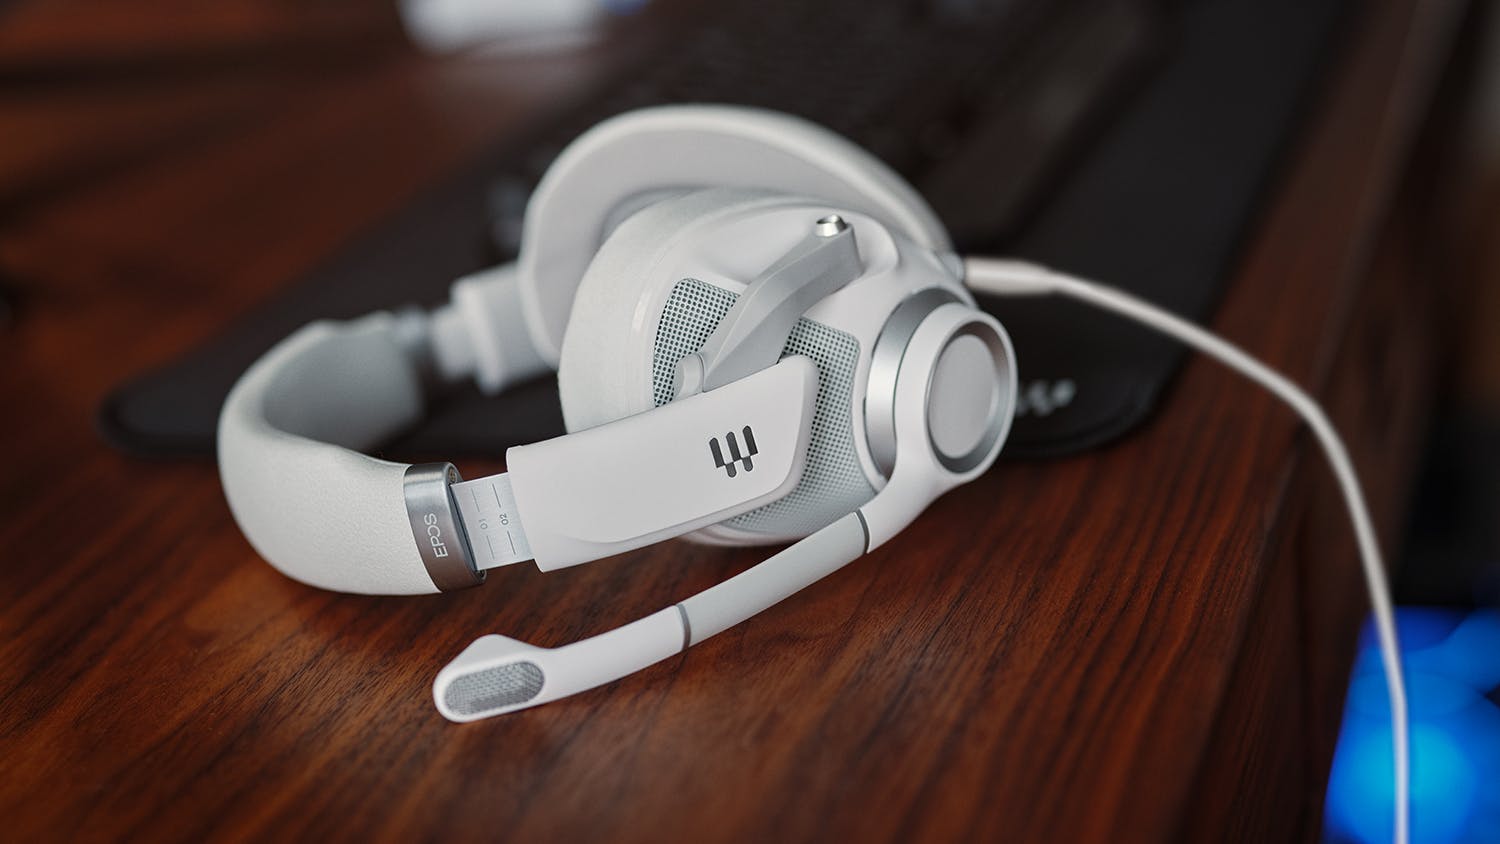 EPOS H6 PRO-Open-White Gaming Headset – flitit